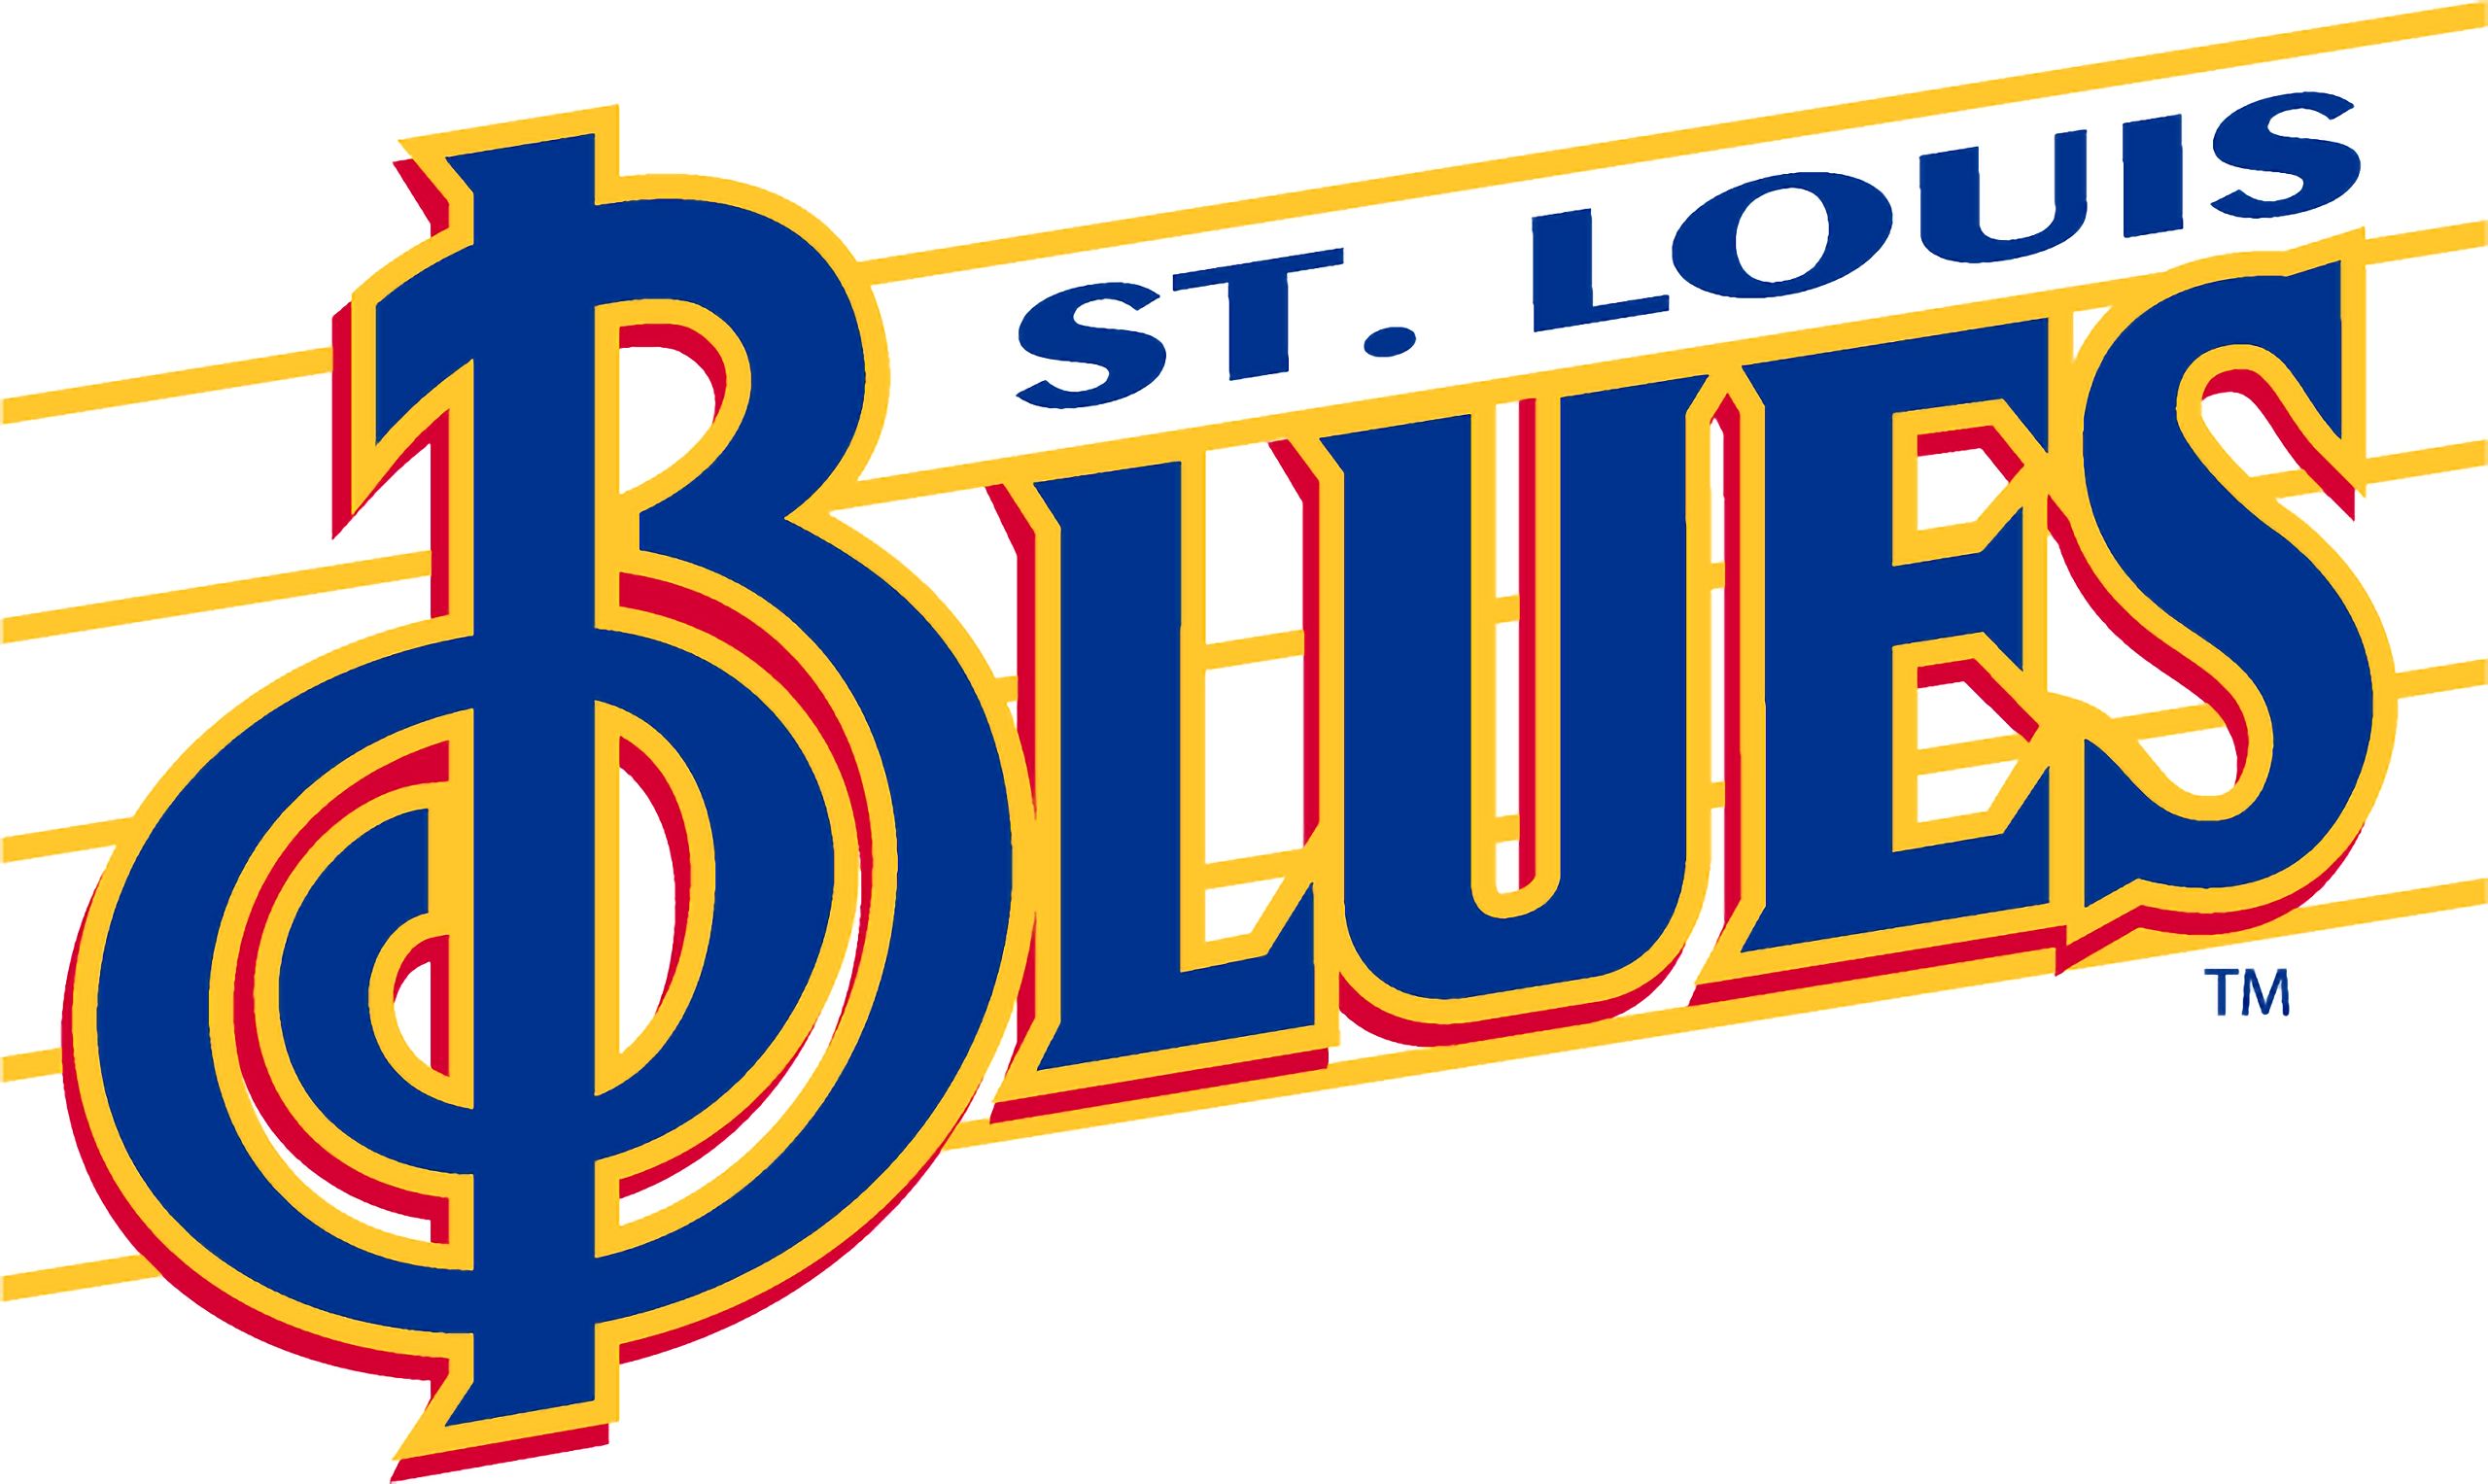 St Louis Blues wallpaper by CASANOVA6T9 - Download on ZEDGE™